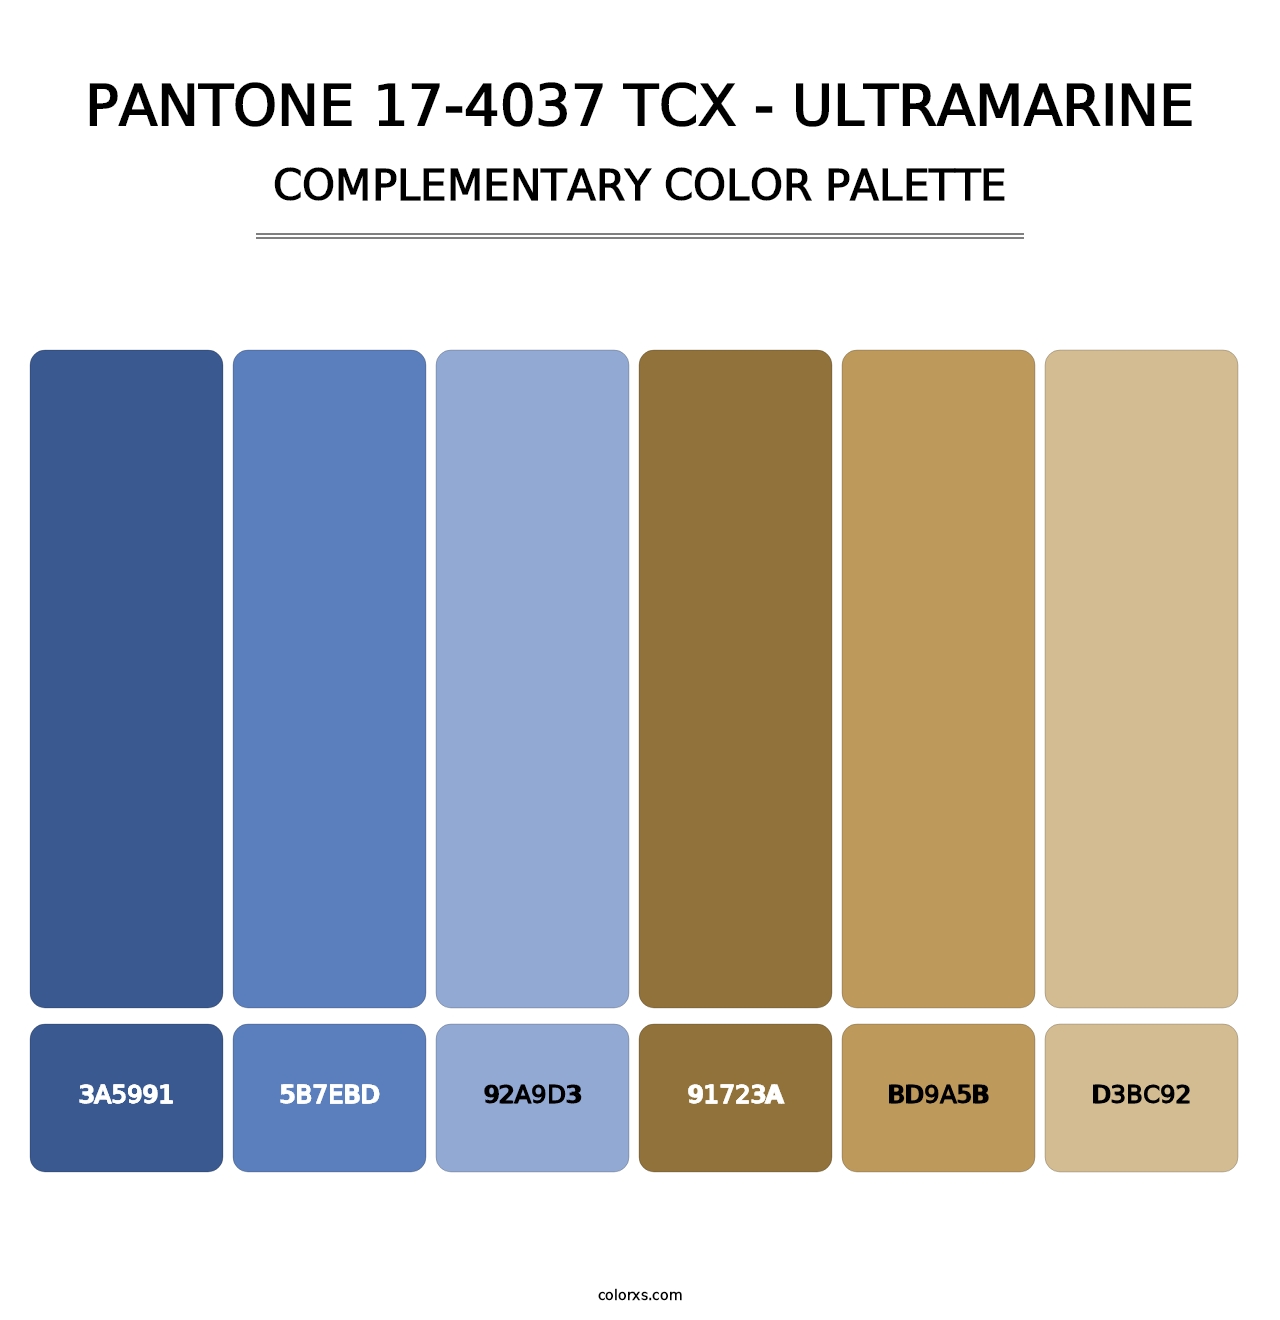 PANTONE 17-4037 TCX - Ultramarine - Complementary Color Palette